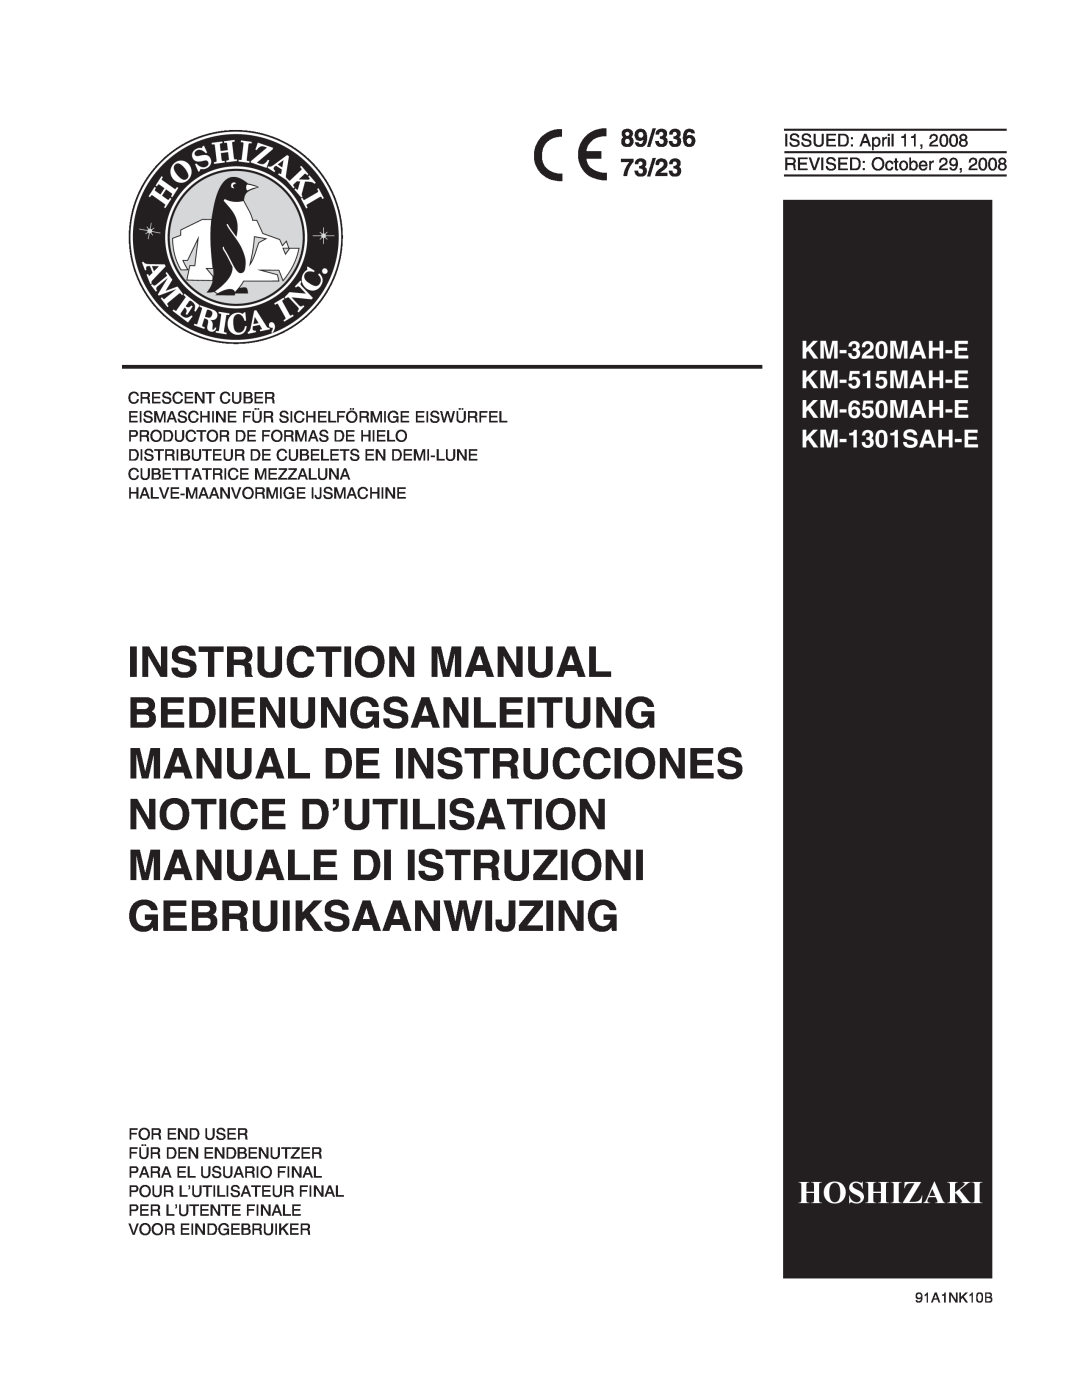 Hoshizaki instruction manual 89/336 73/23, Hoshizaki, KM-320MAH-E KM-515MAH-E KM-650MAH-E KM-1301SAH-E 